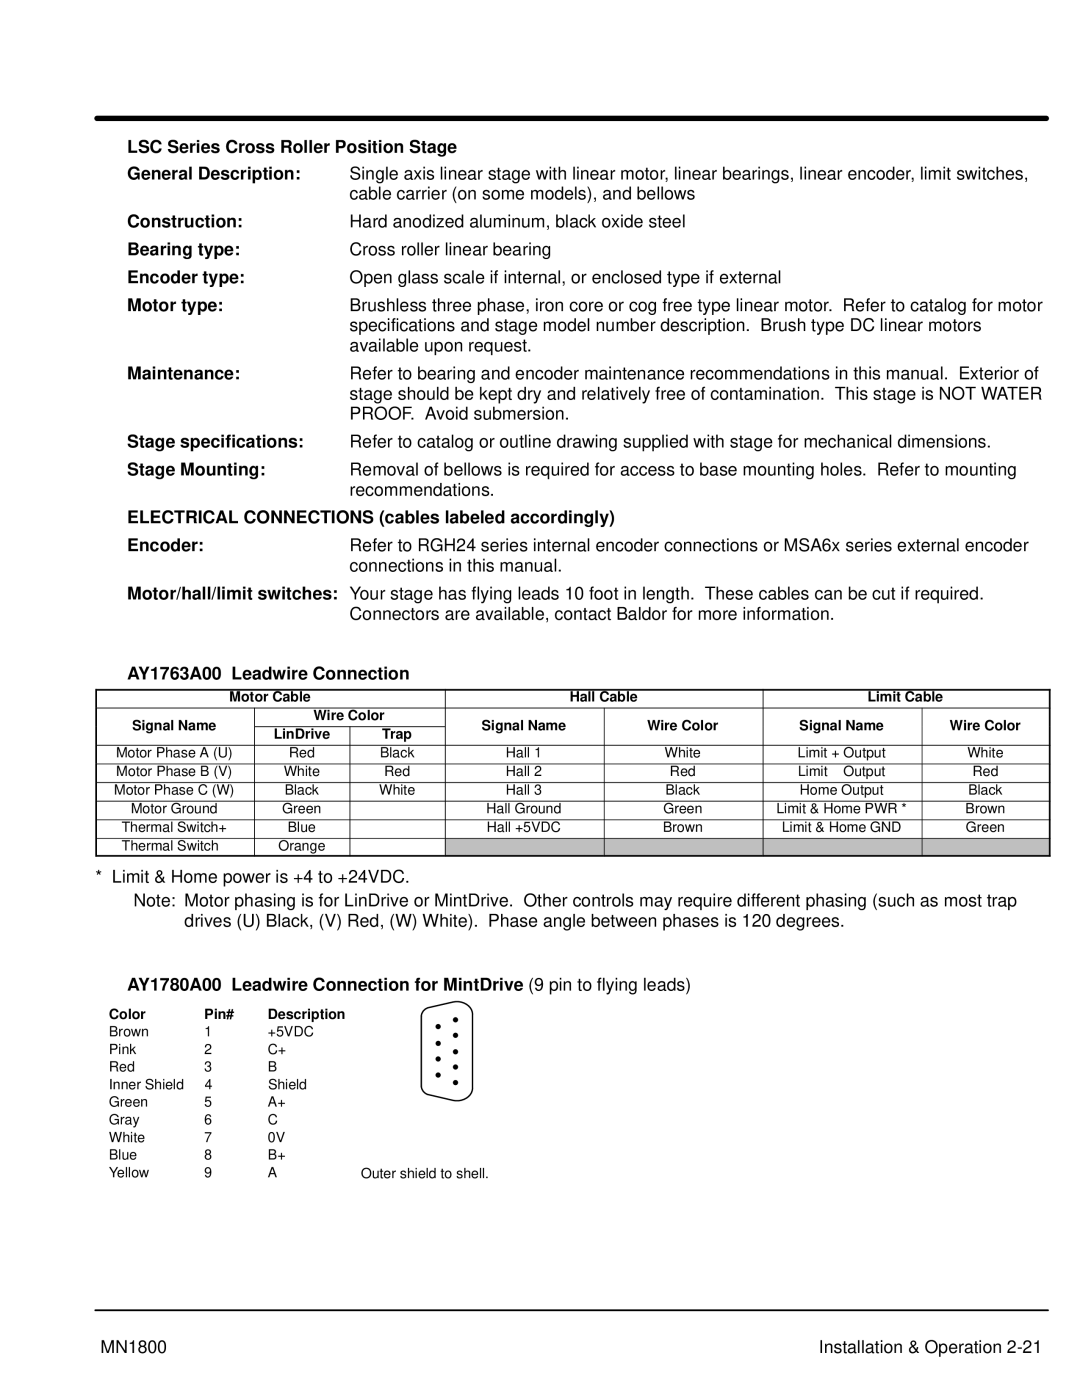 Baldor iMN1800 manual LSC Series Cross Roller Position Stage General Description, Construction 